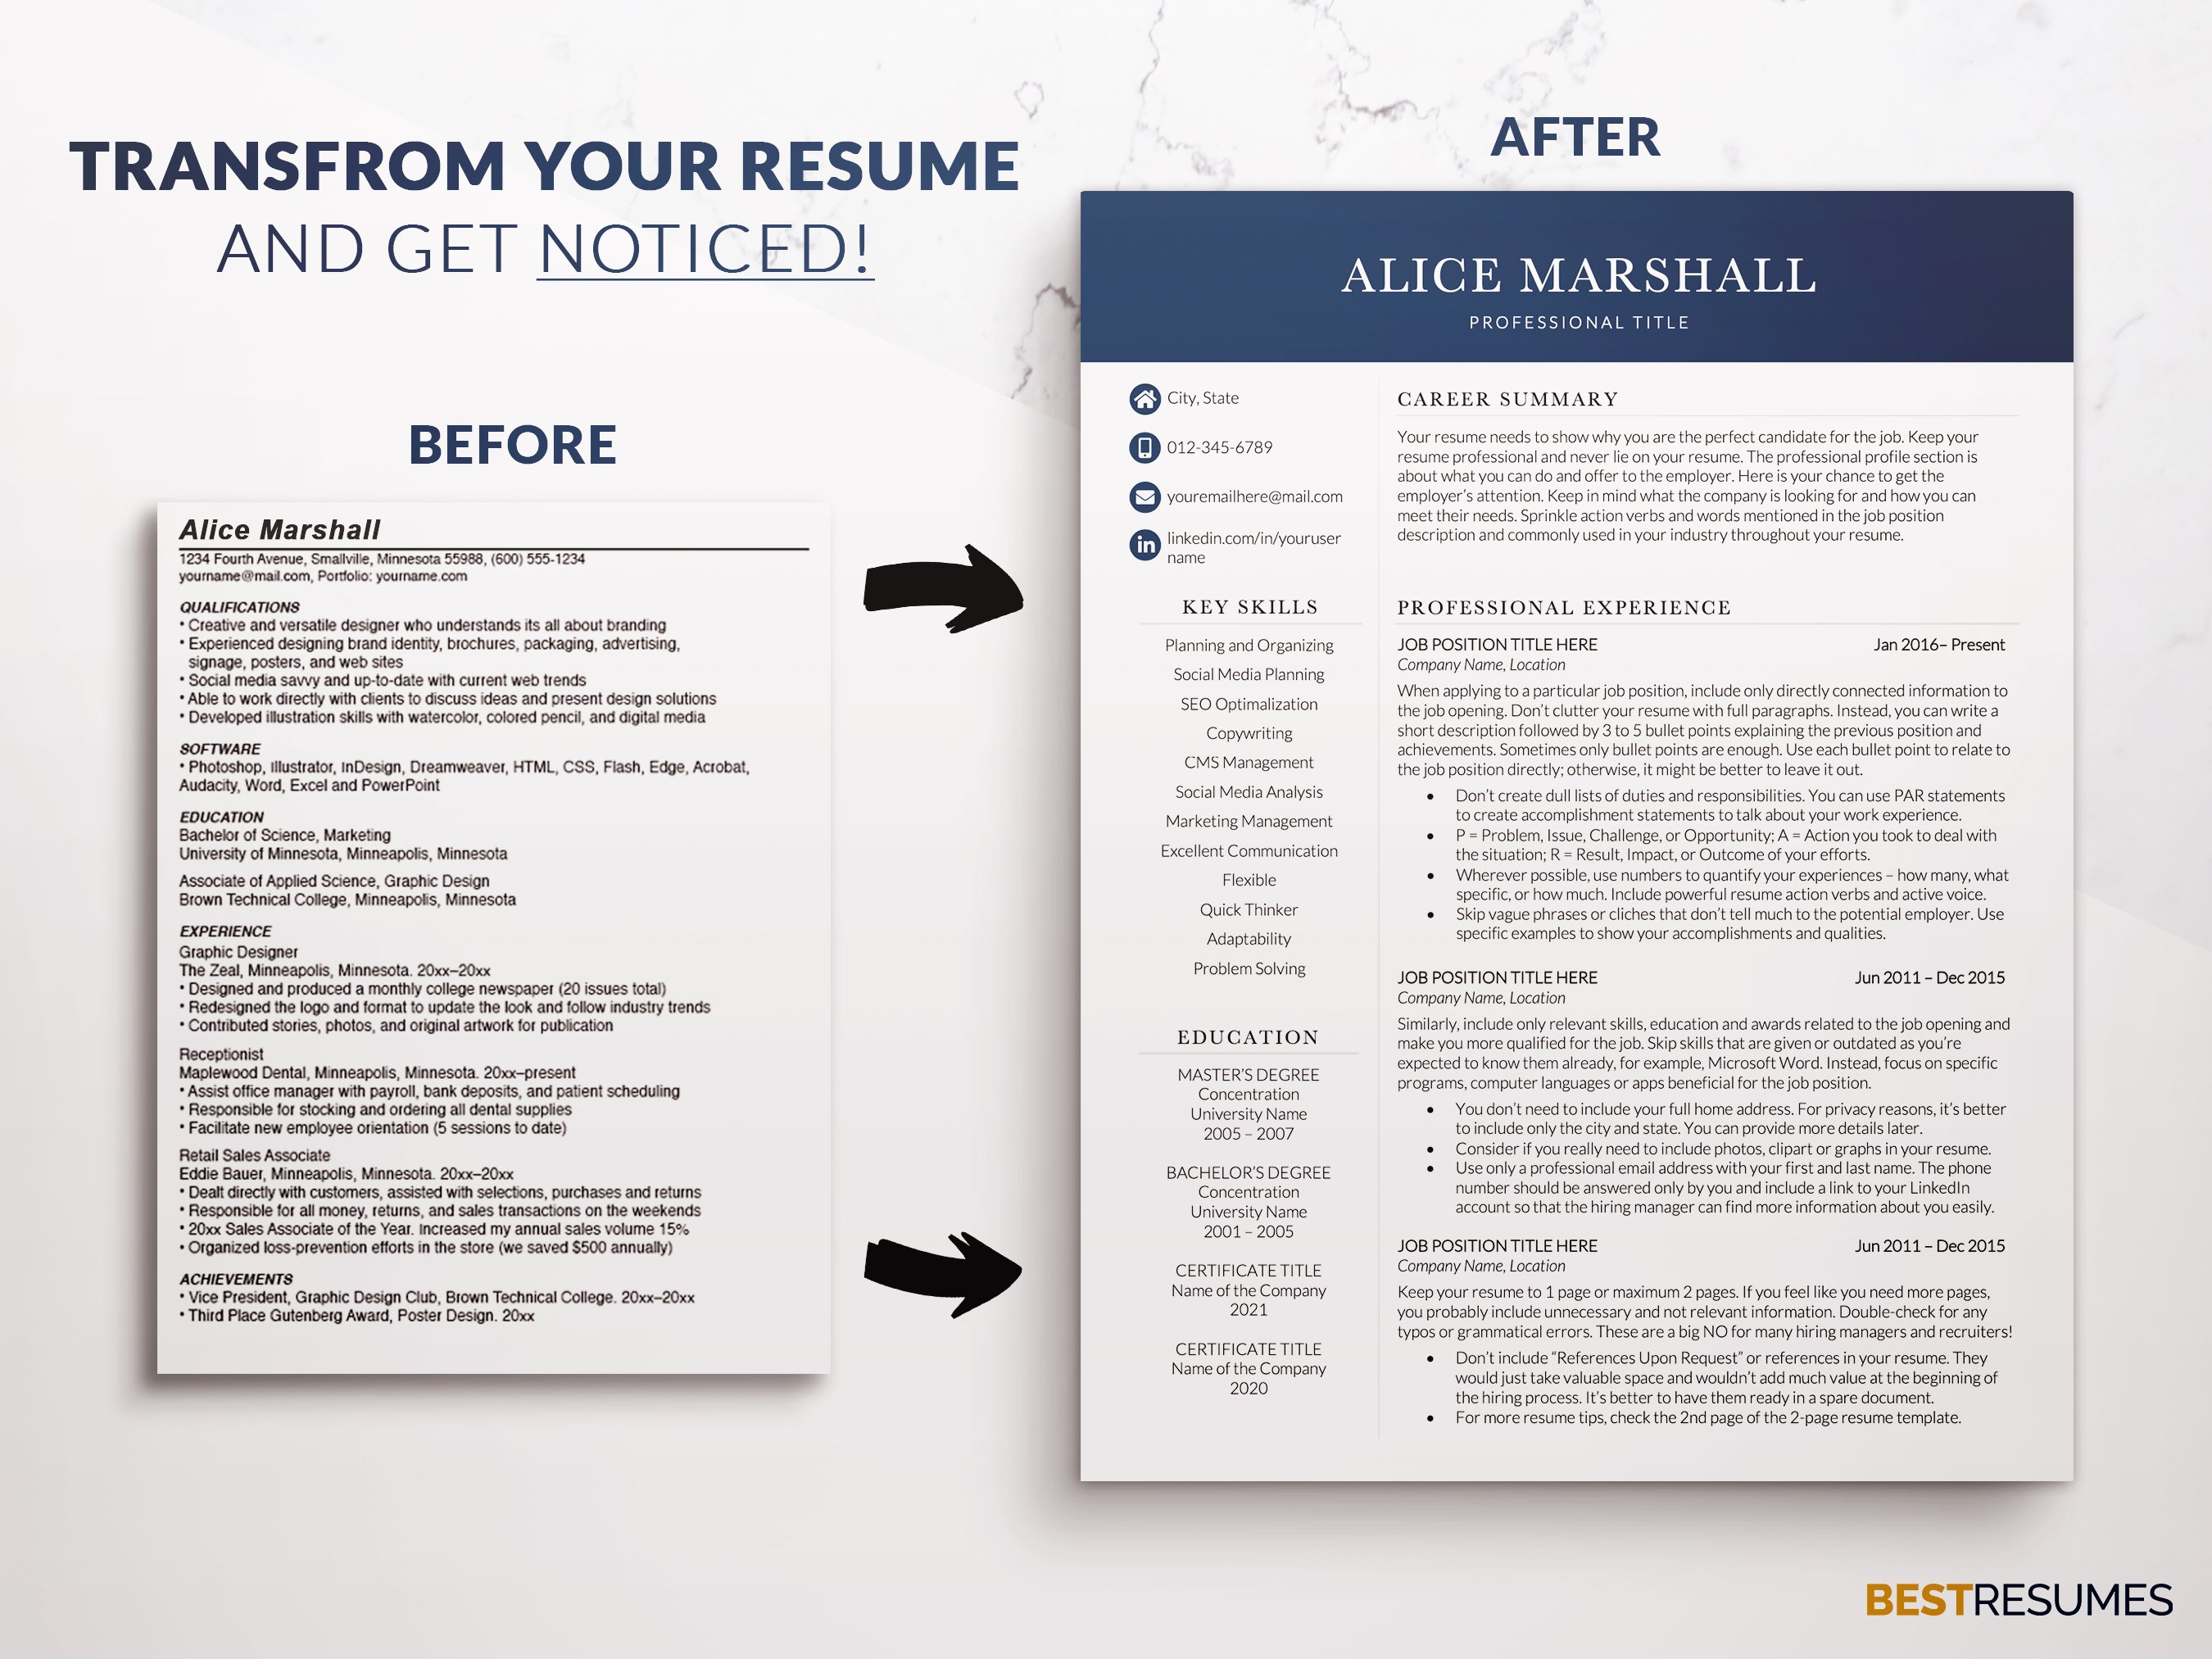 c level resume template resume transformation alice marshall 136